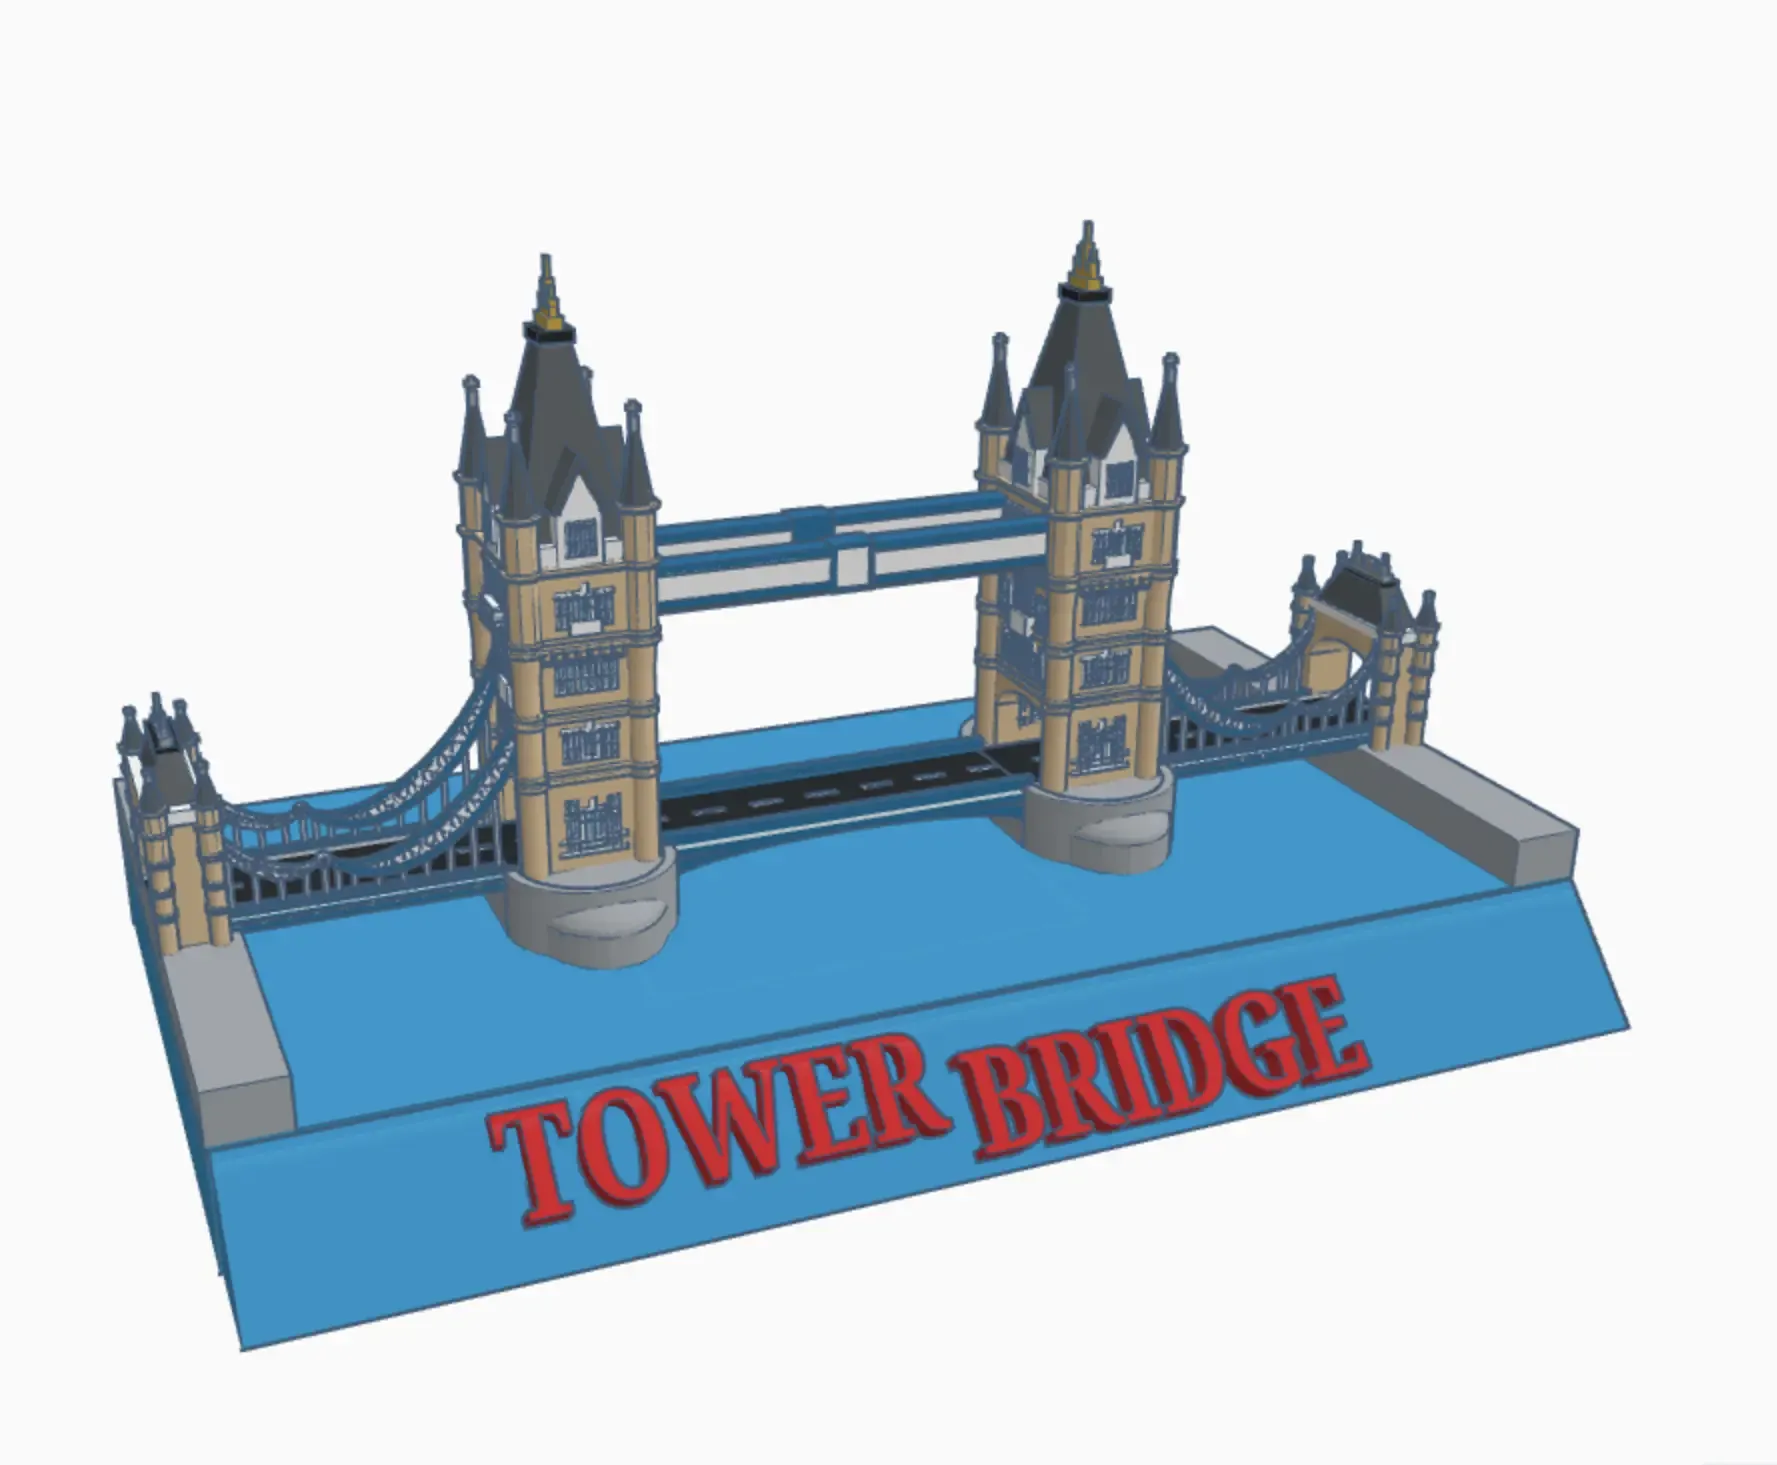 Tower bridge souvenir